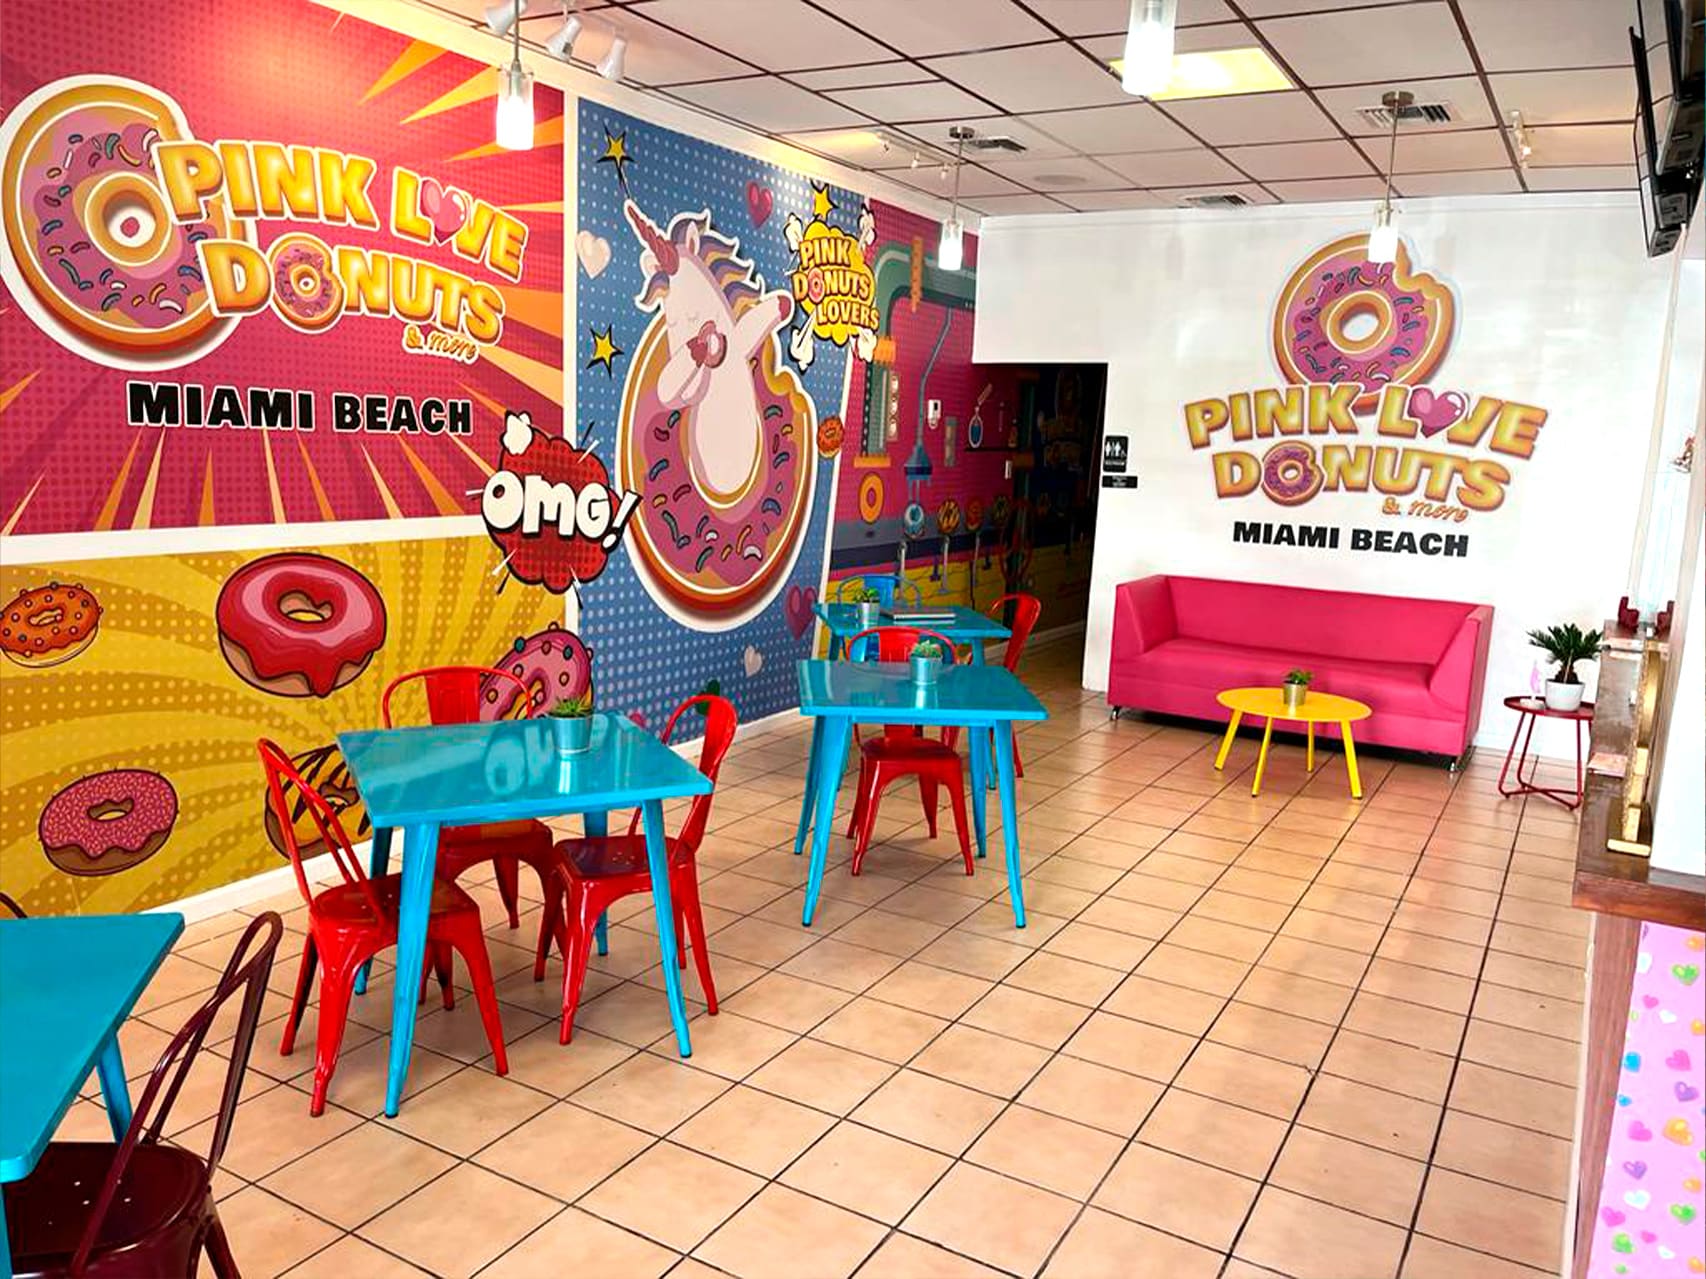 Pink Love Donuts & More Miami Beach location